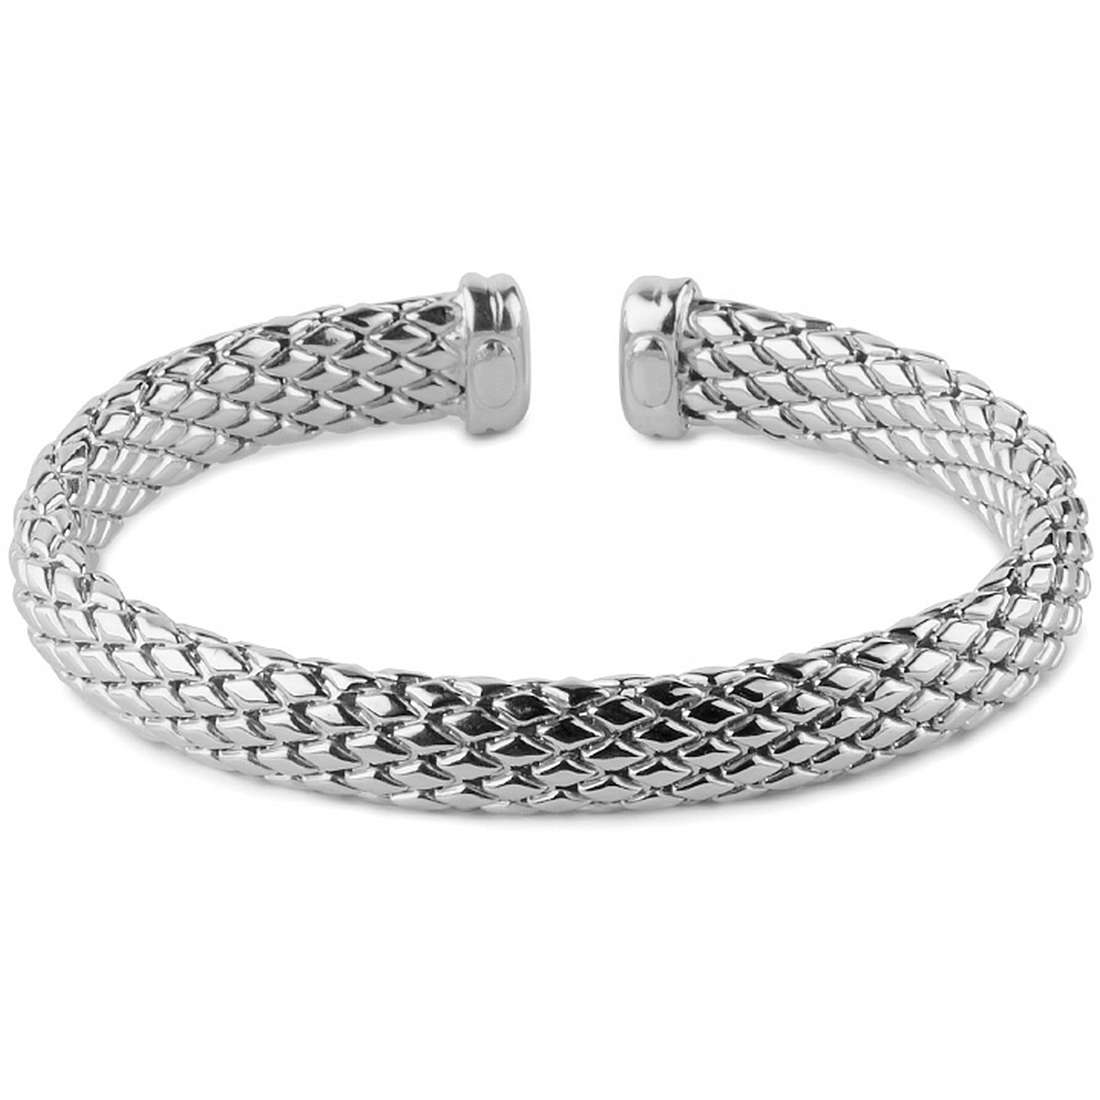 bracelet woman jewellery Sovrani Fashion Mood J4013